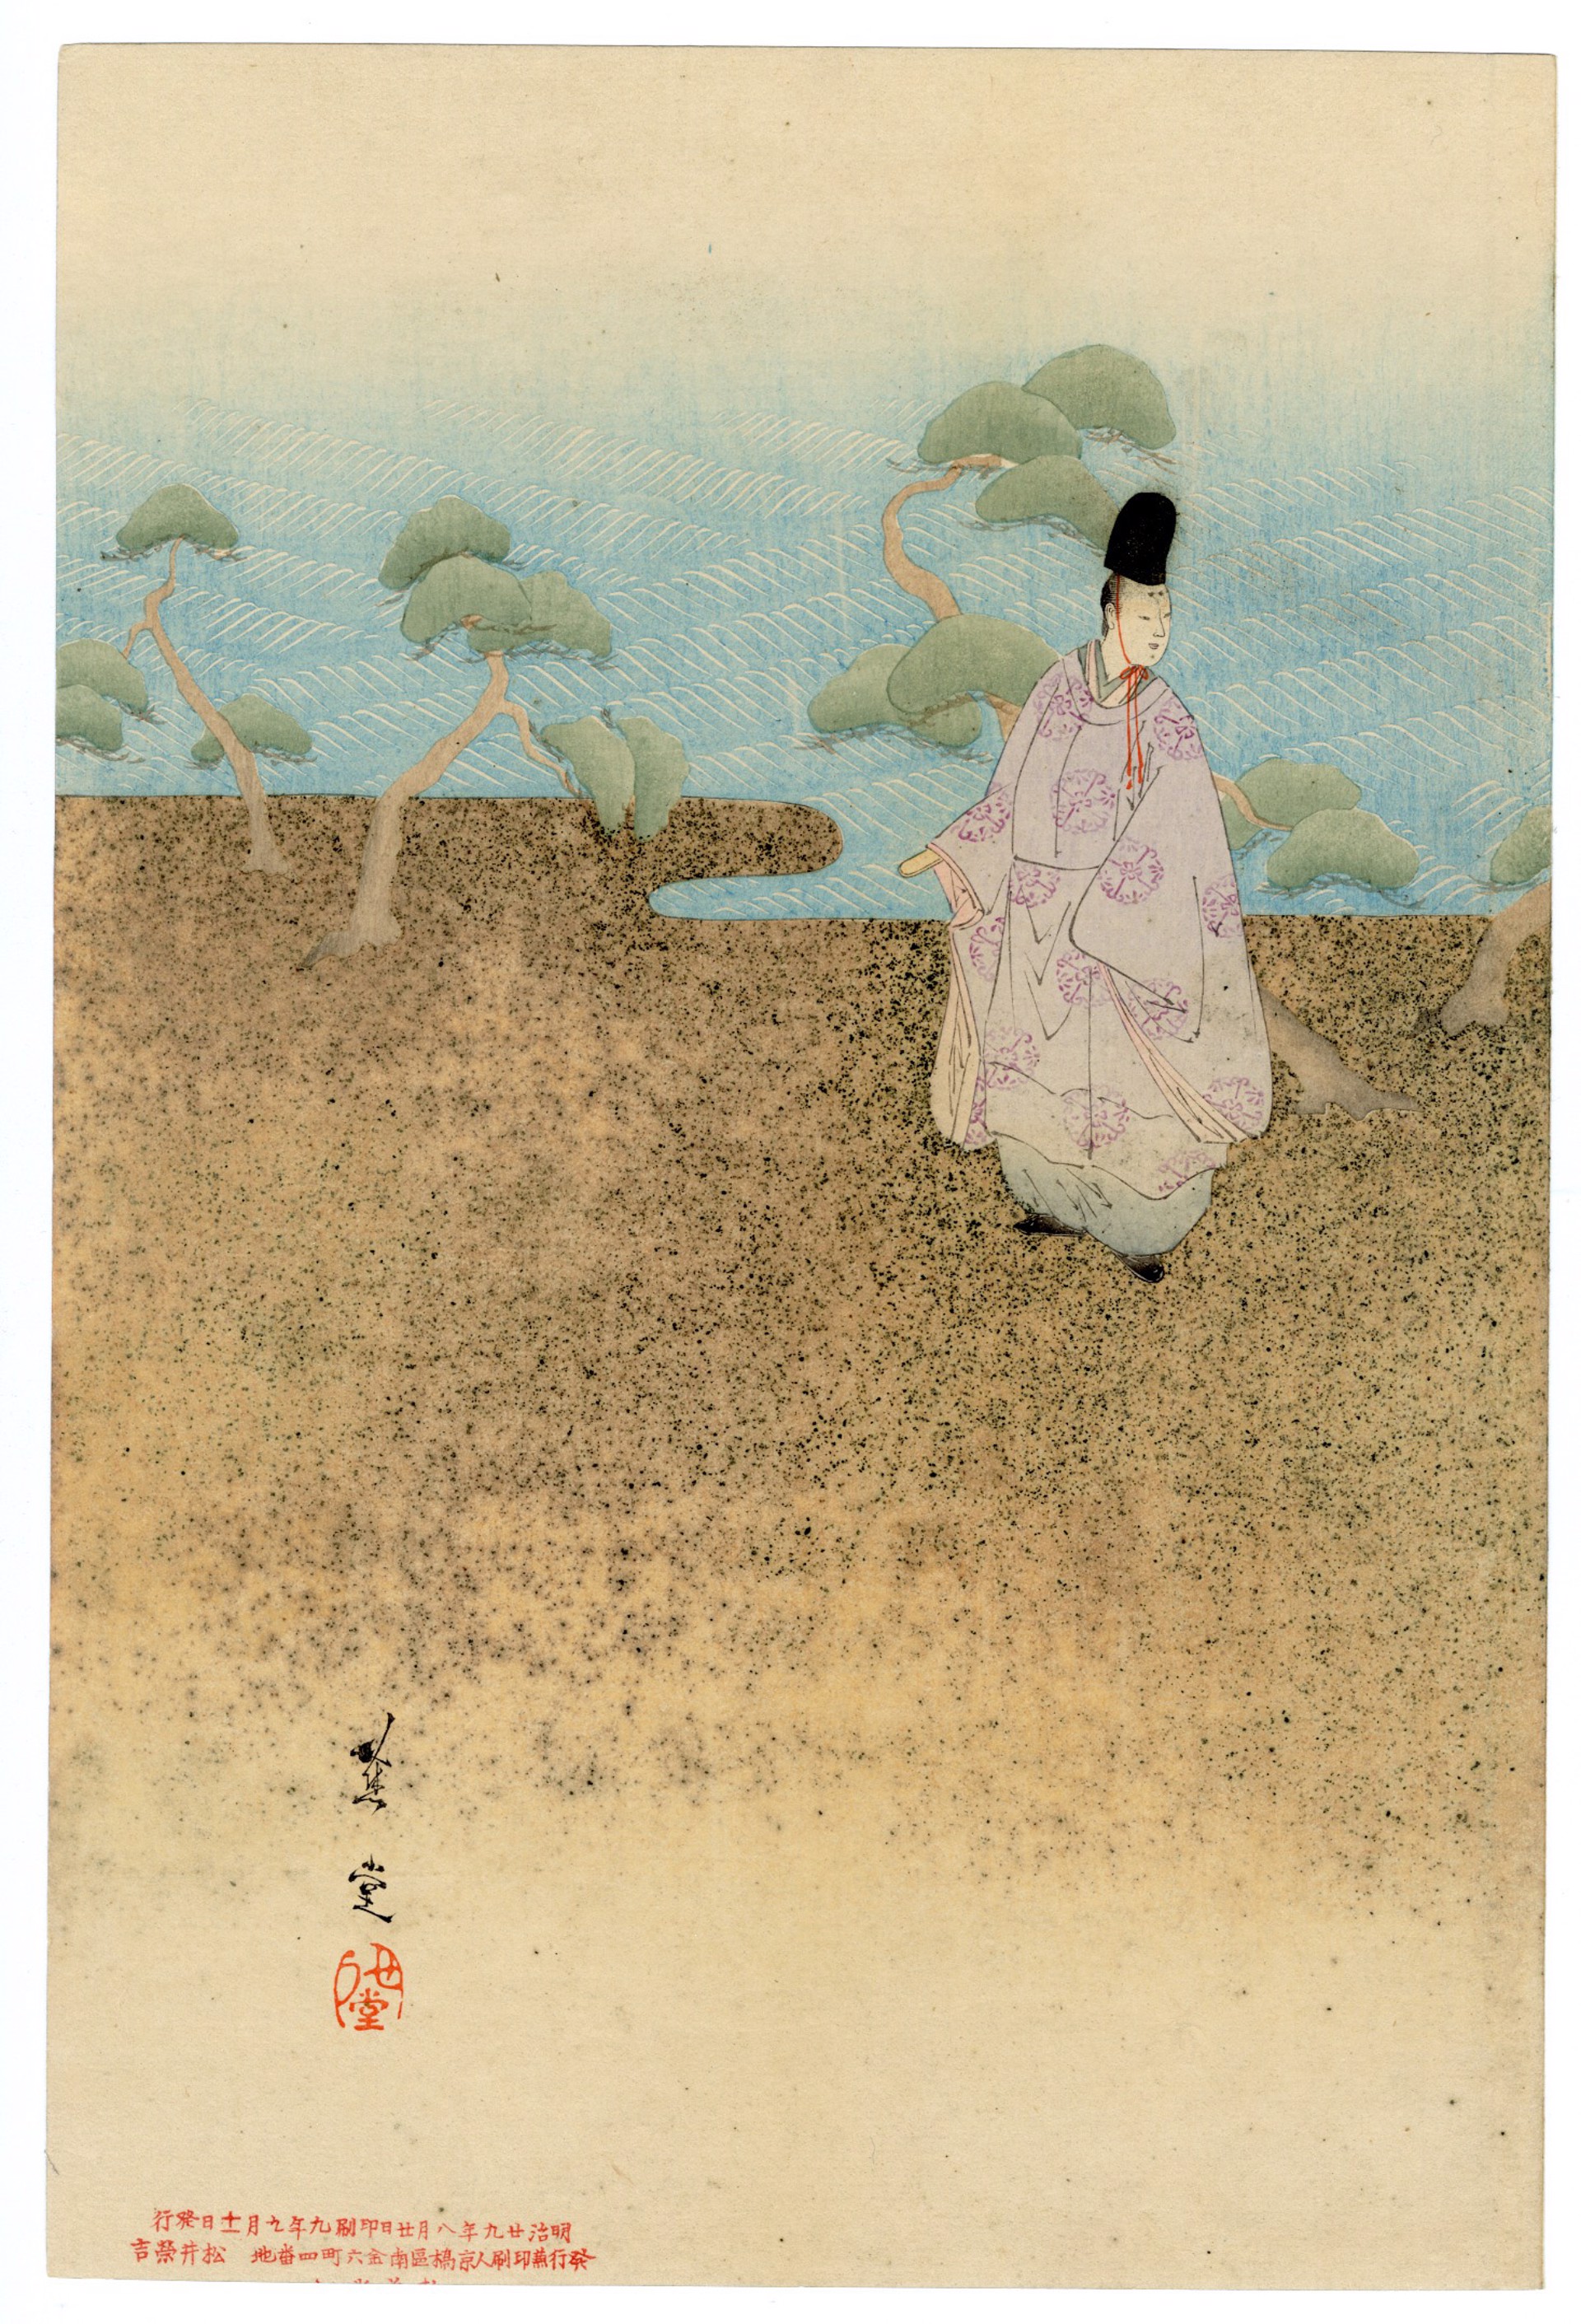 The Salt Maidens, Murasame and Matsukaza by Yasuda Shodo